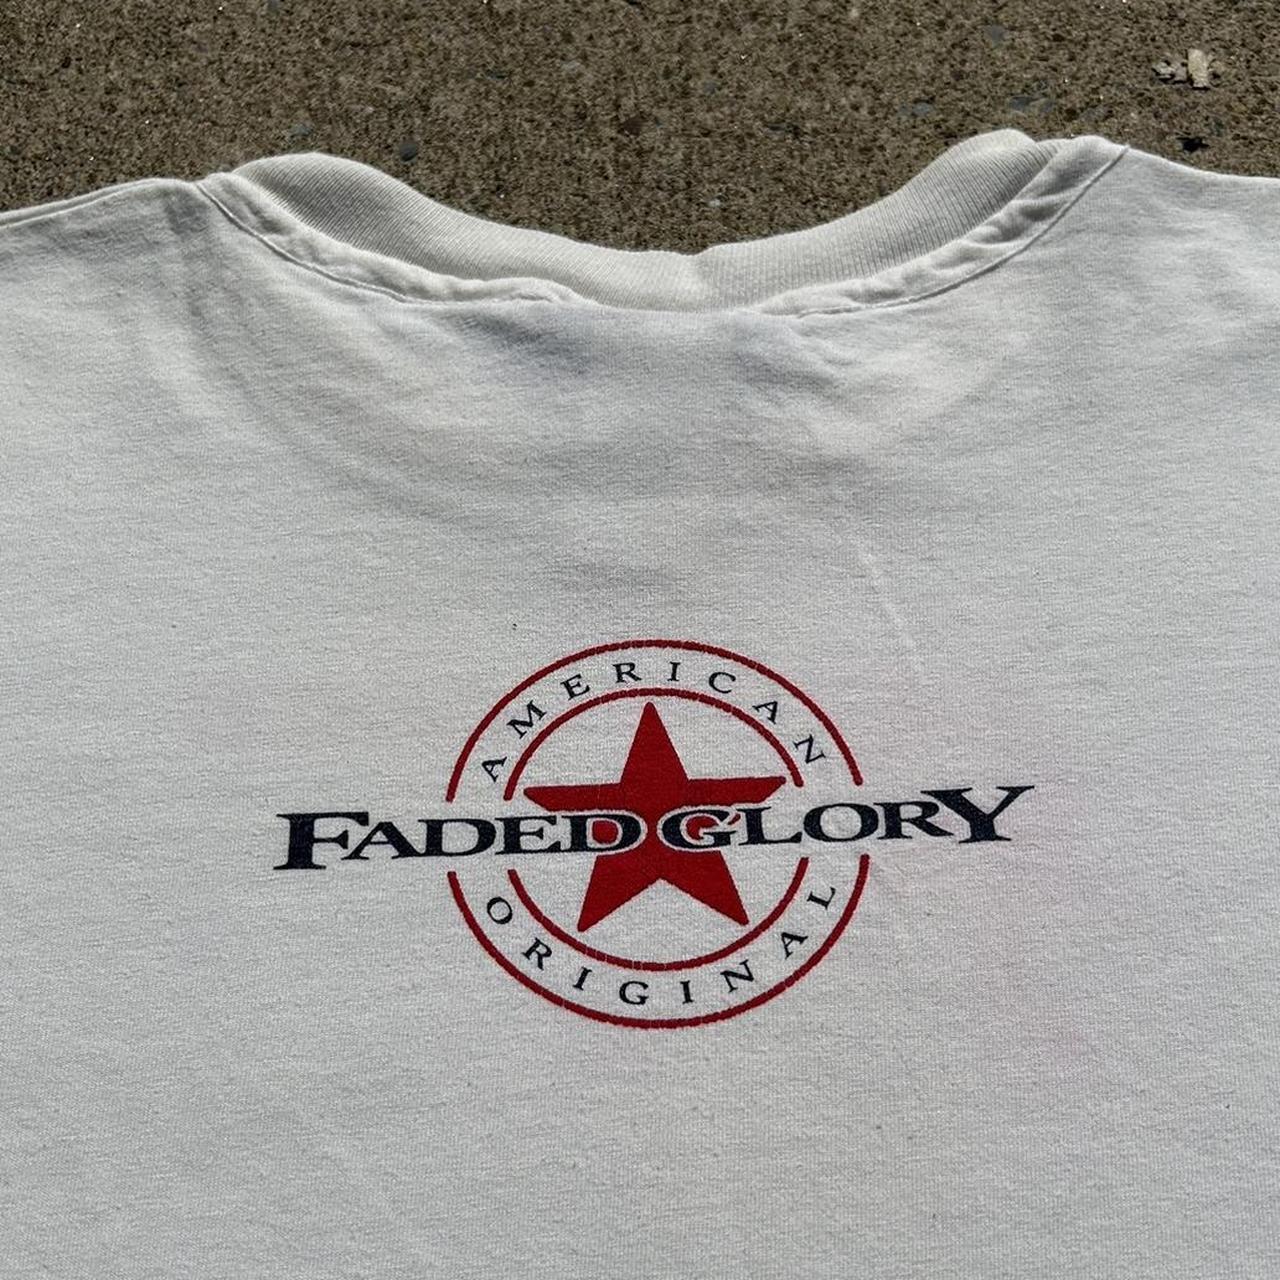 Faded Glory  Albany Tshirt Shop.com